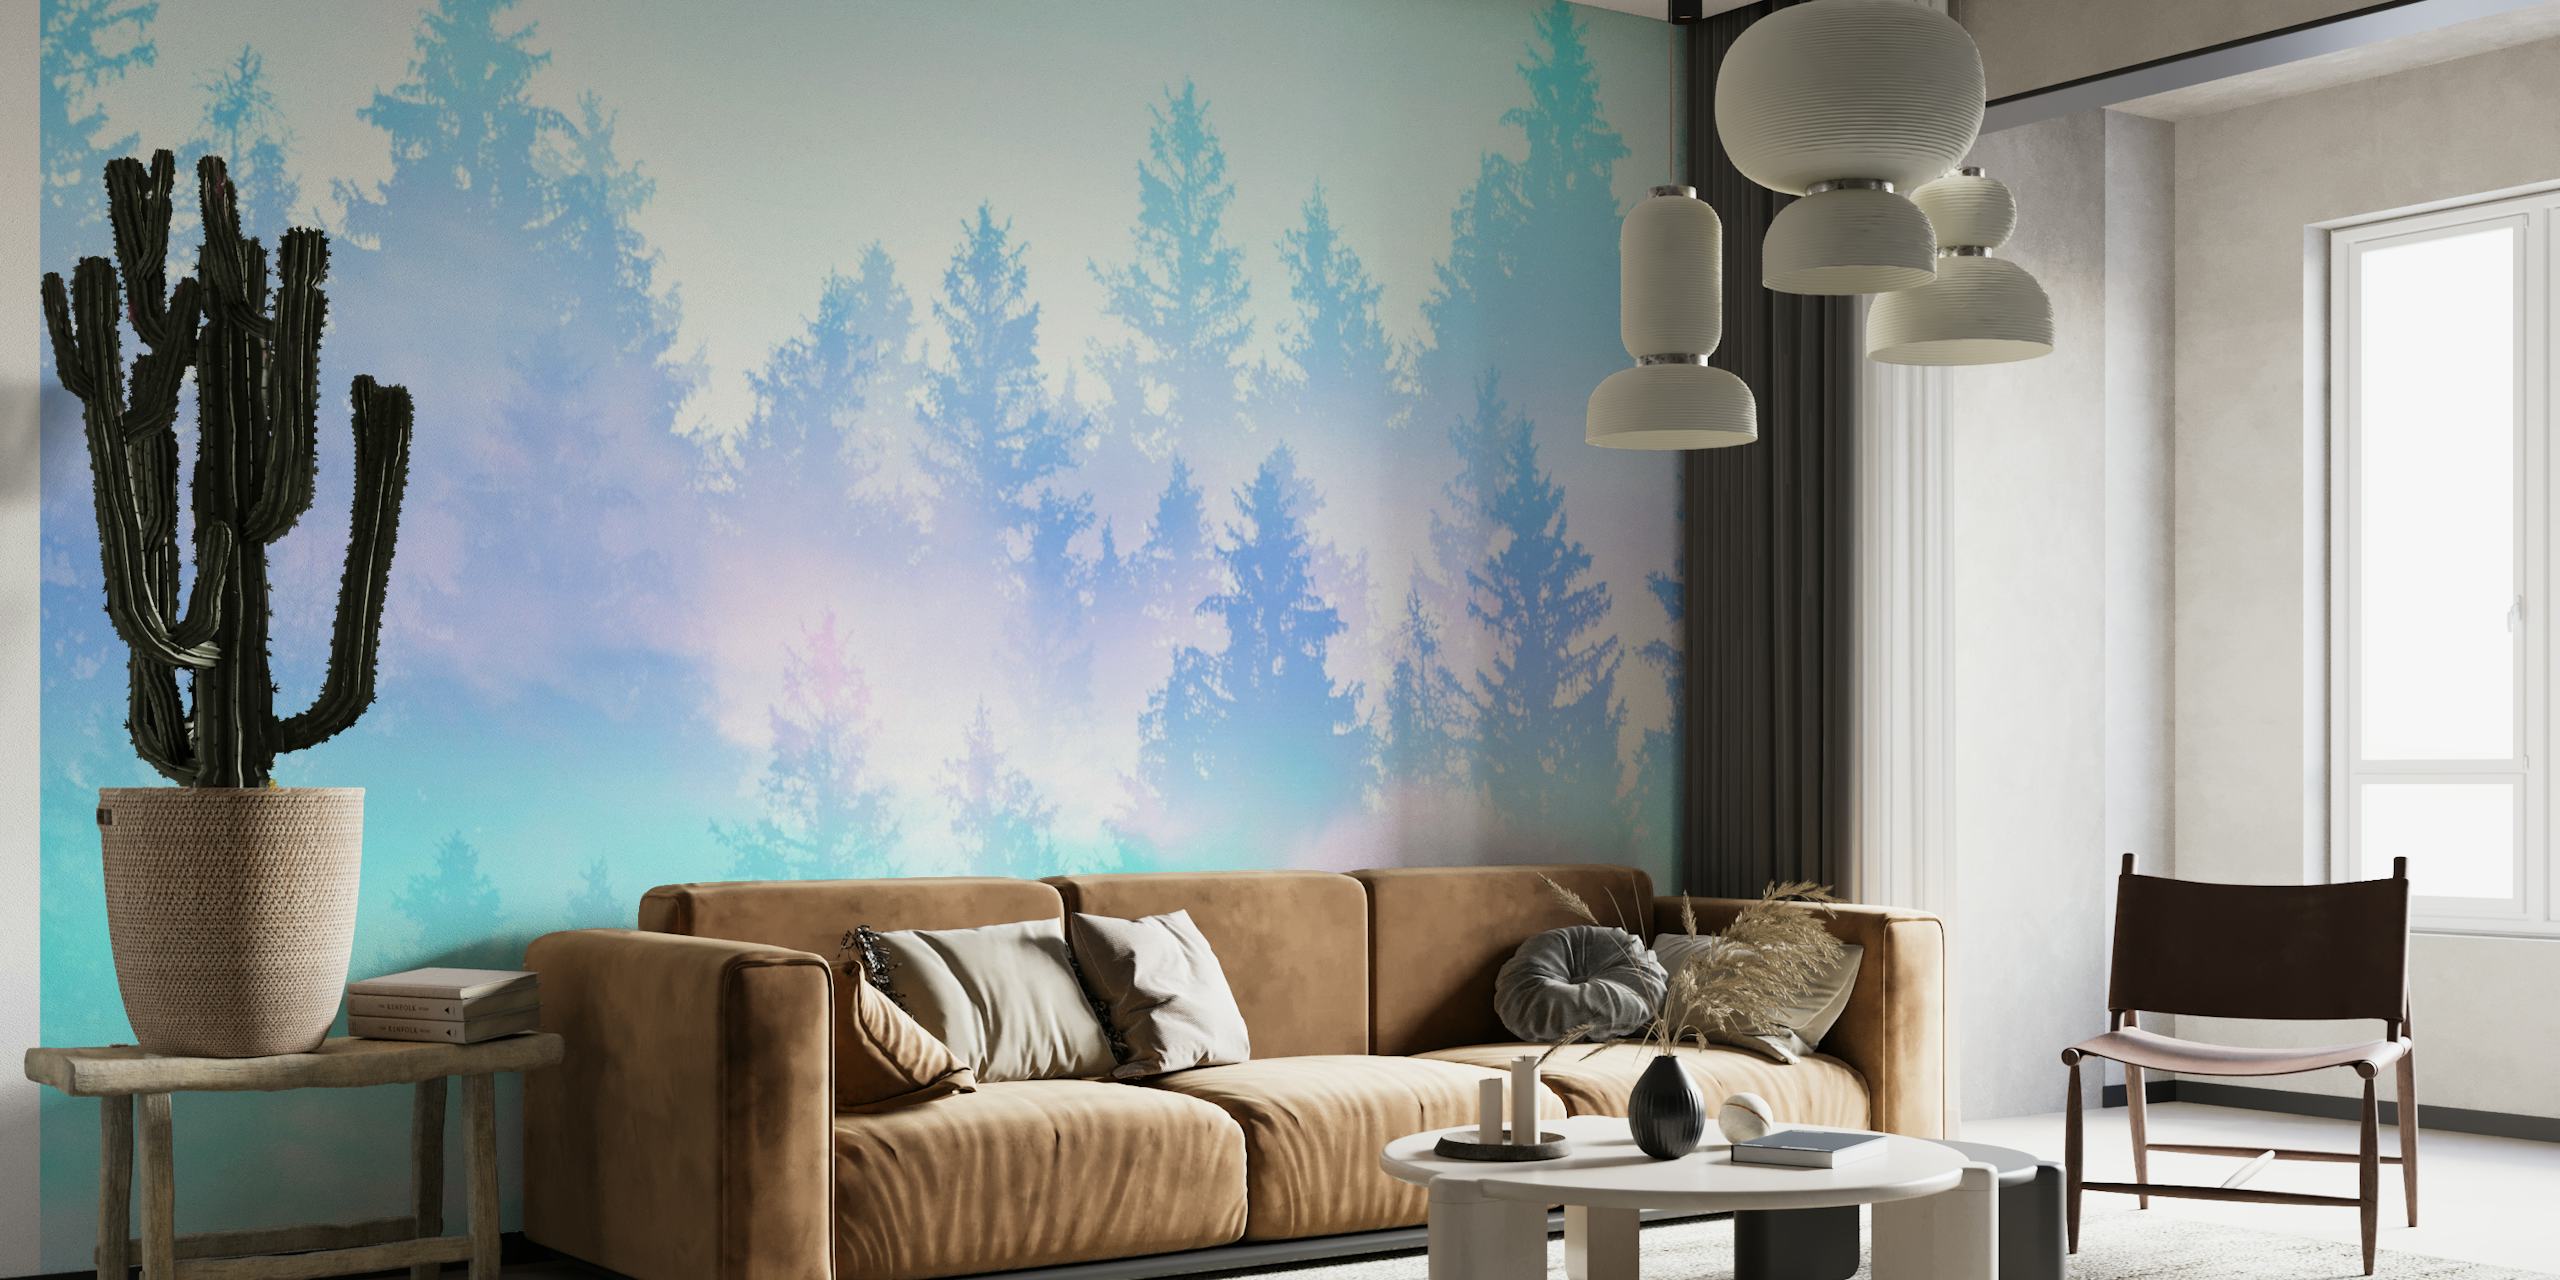 Pastel Forest Dream 4 behang